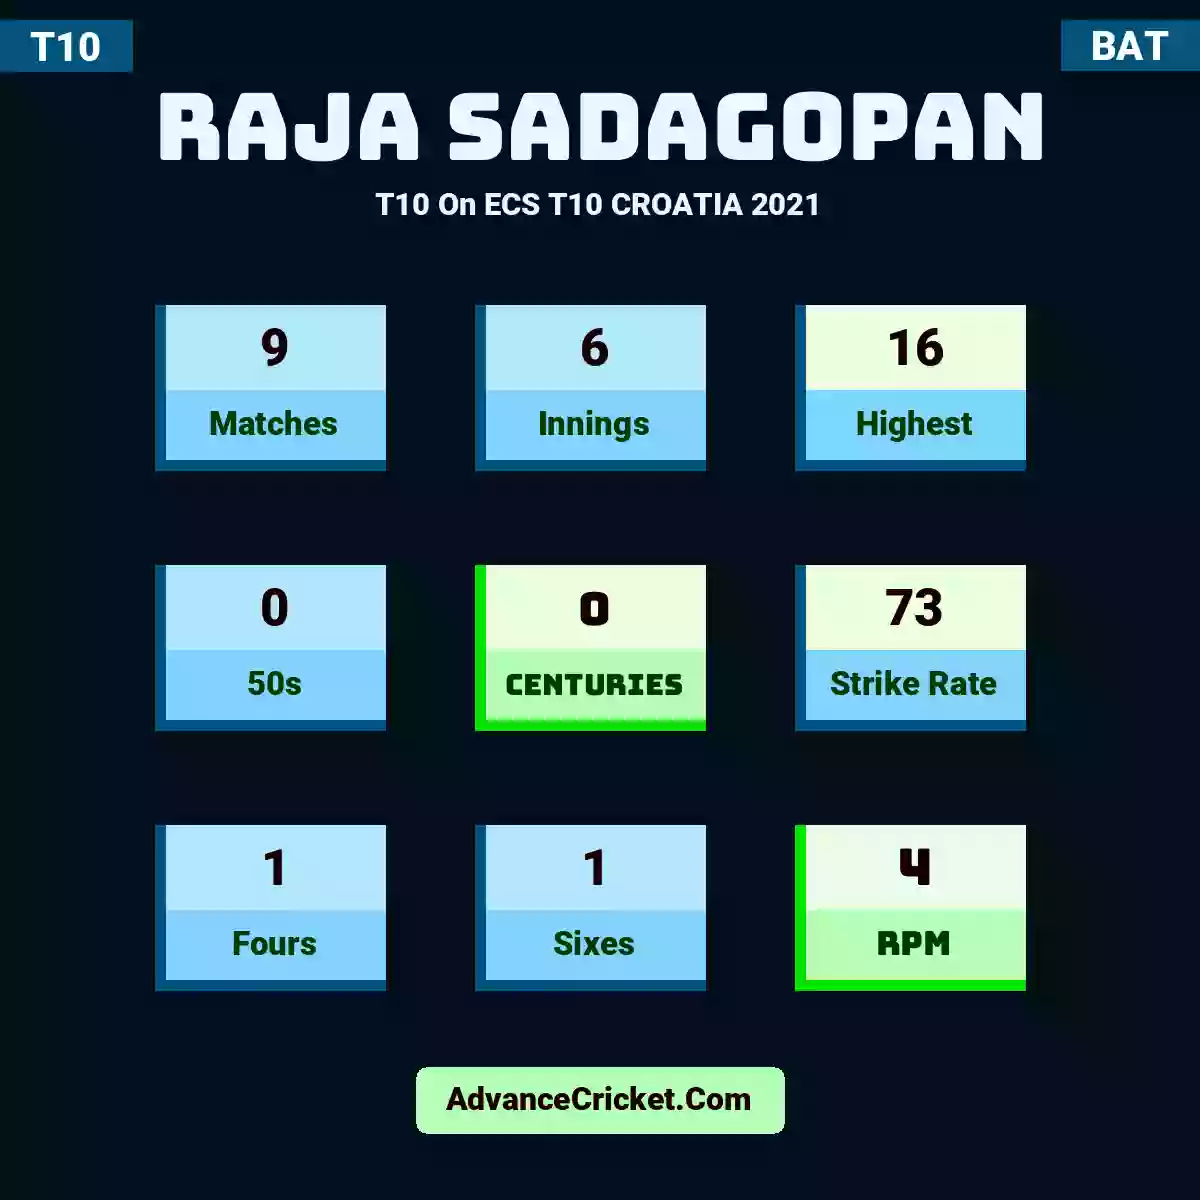 Raja Sadagopan T10  On ECS T10 CROATIA 2021, Raja Sadagopan played 9 matches, scored 16 runs as highest, 0 half-centuries, and 0 centuries, with a strike rate of 73. R.Sadagopan hit 1 fours and 1 sixes, with an RPM of 4.